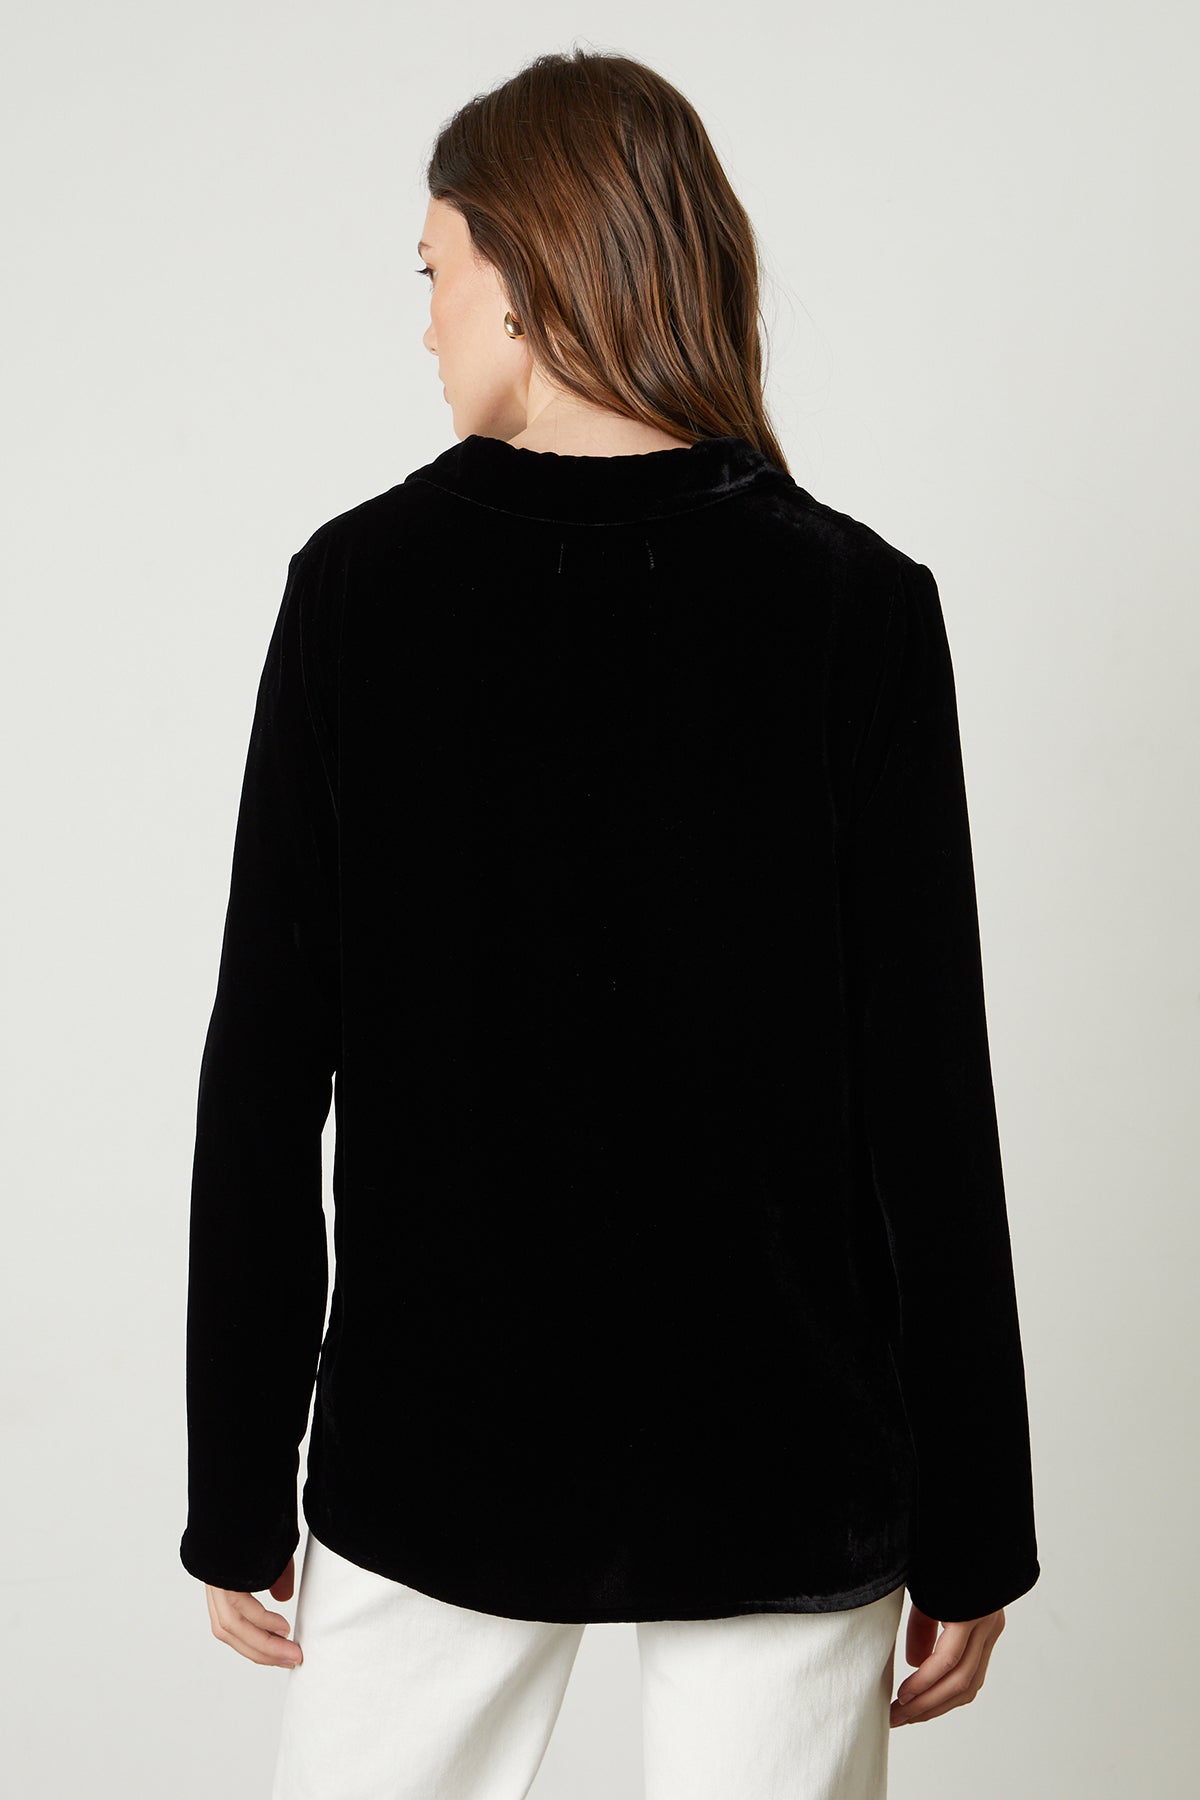 Jordy Silk Velvet Collar Top in black back-25548658409665